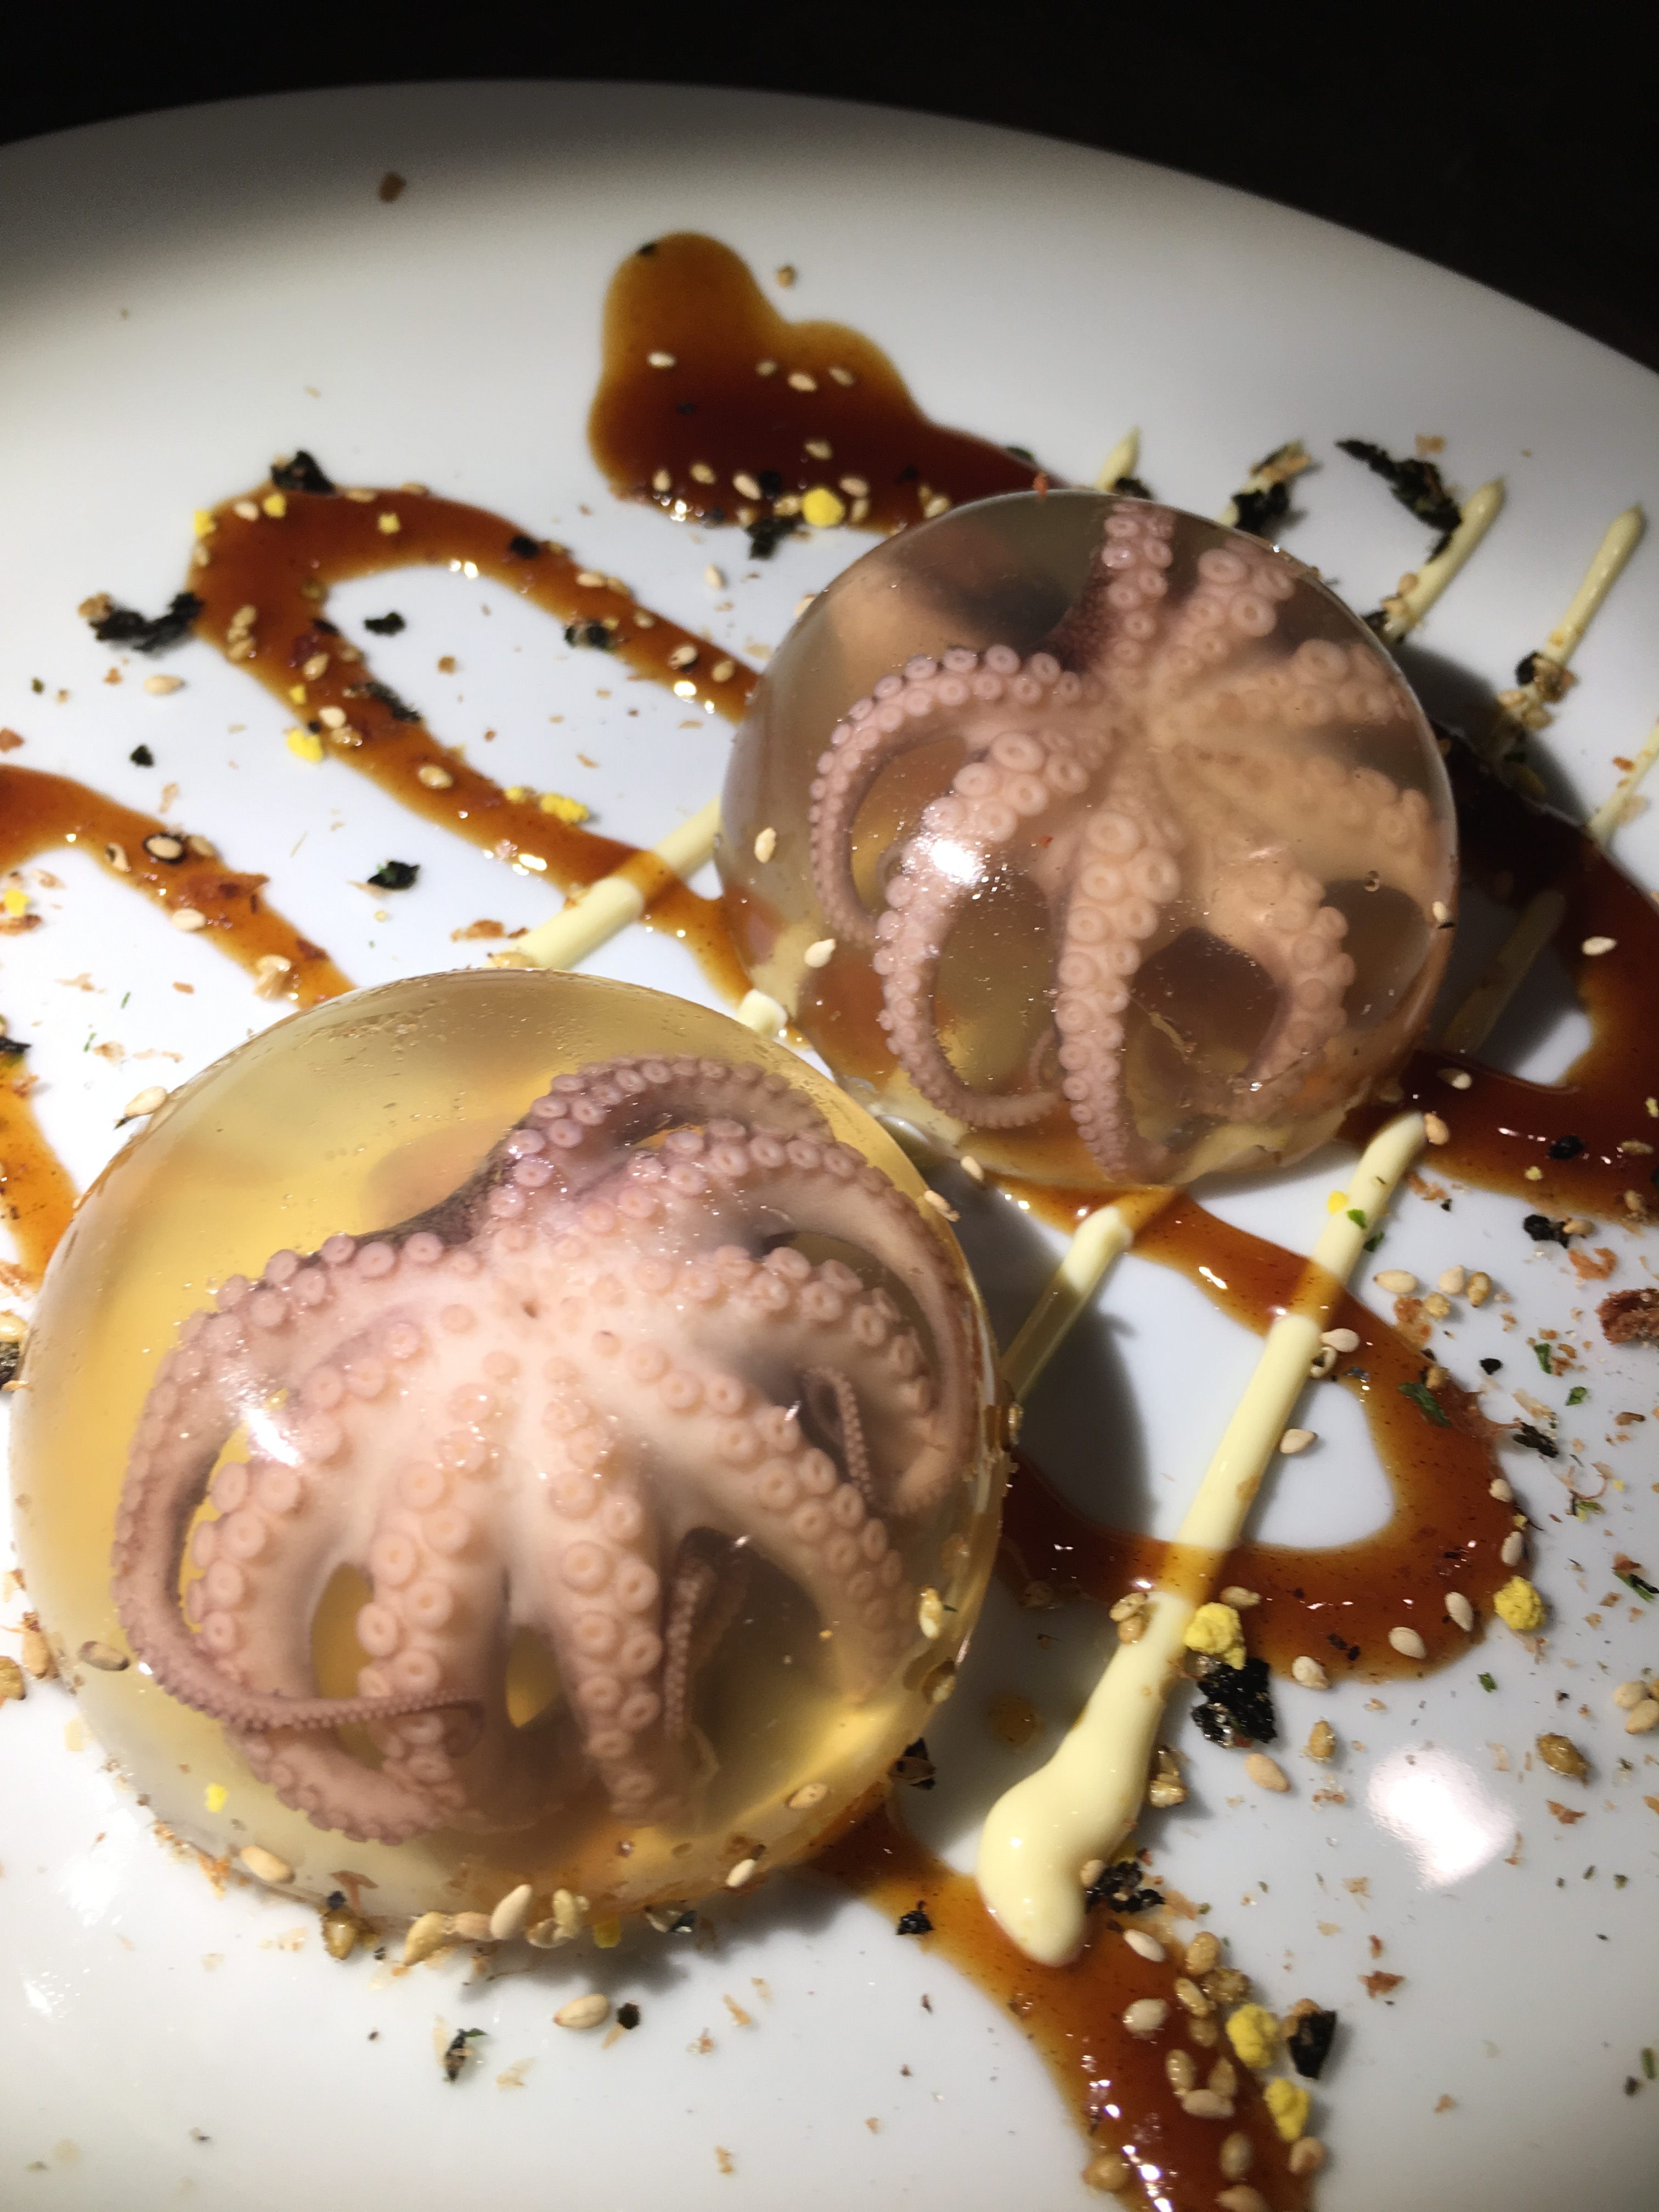 Ken Albala's takoyaki-inspired aspic with baby octopuses in sake-infused jelly.